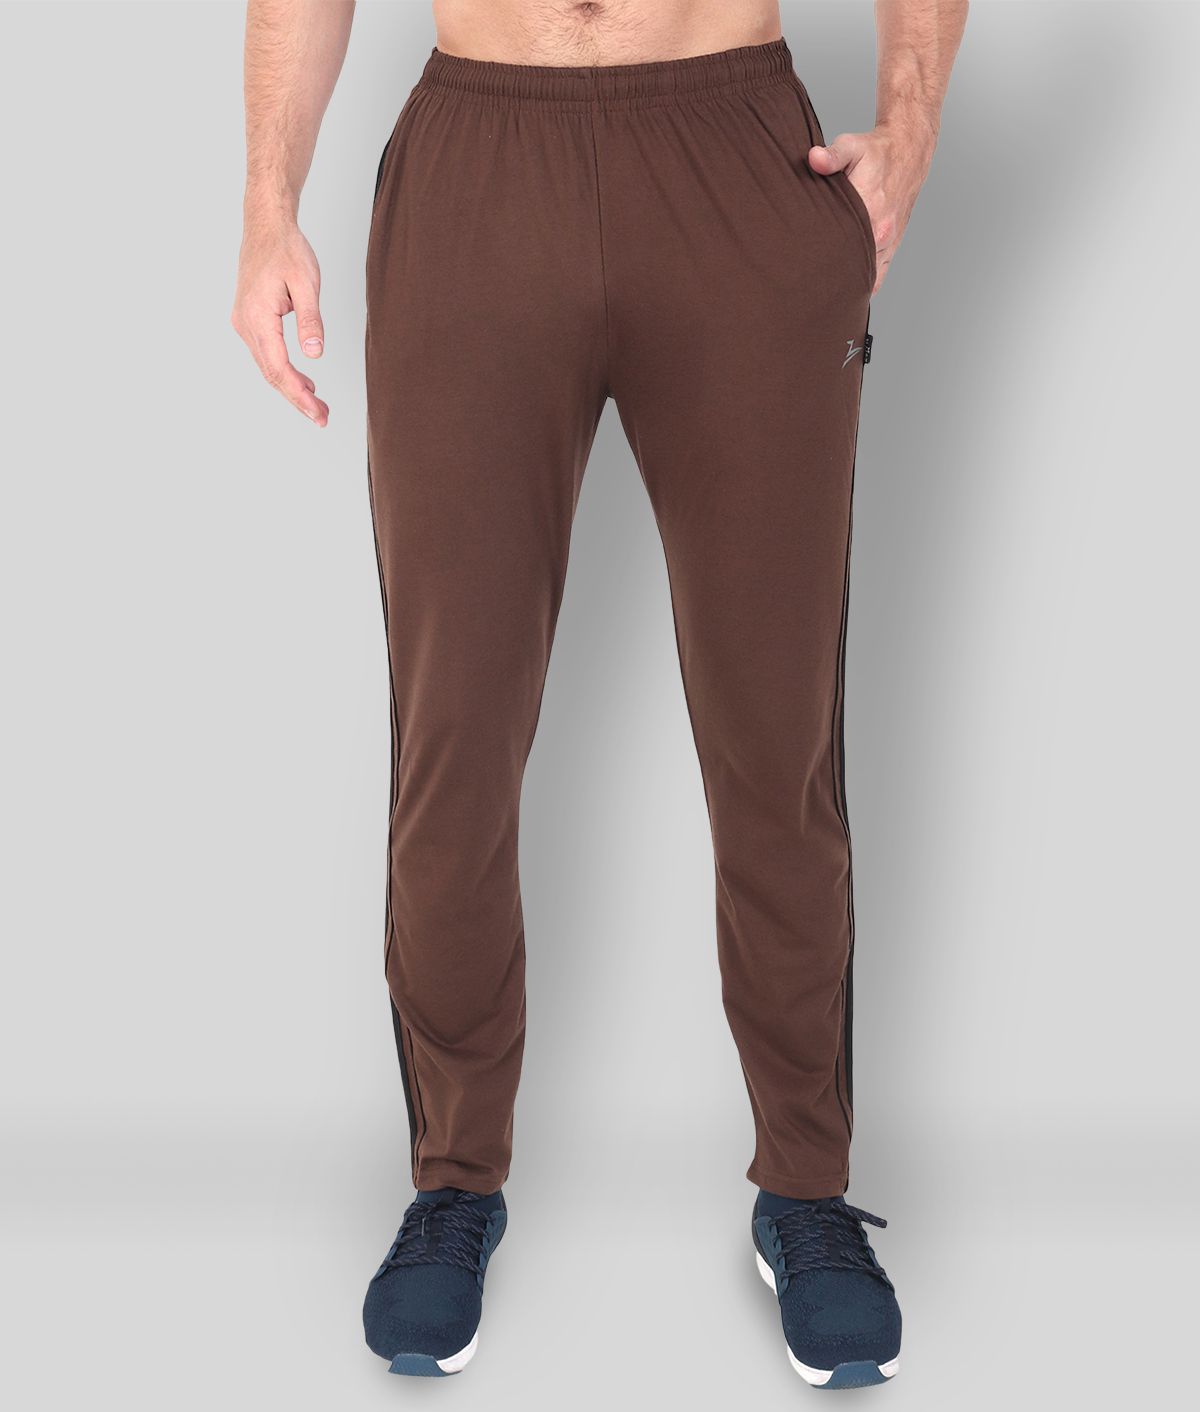 Zeffit - Brown Cotton Blend Men's Trackpants ( Pack of 1 )